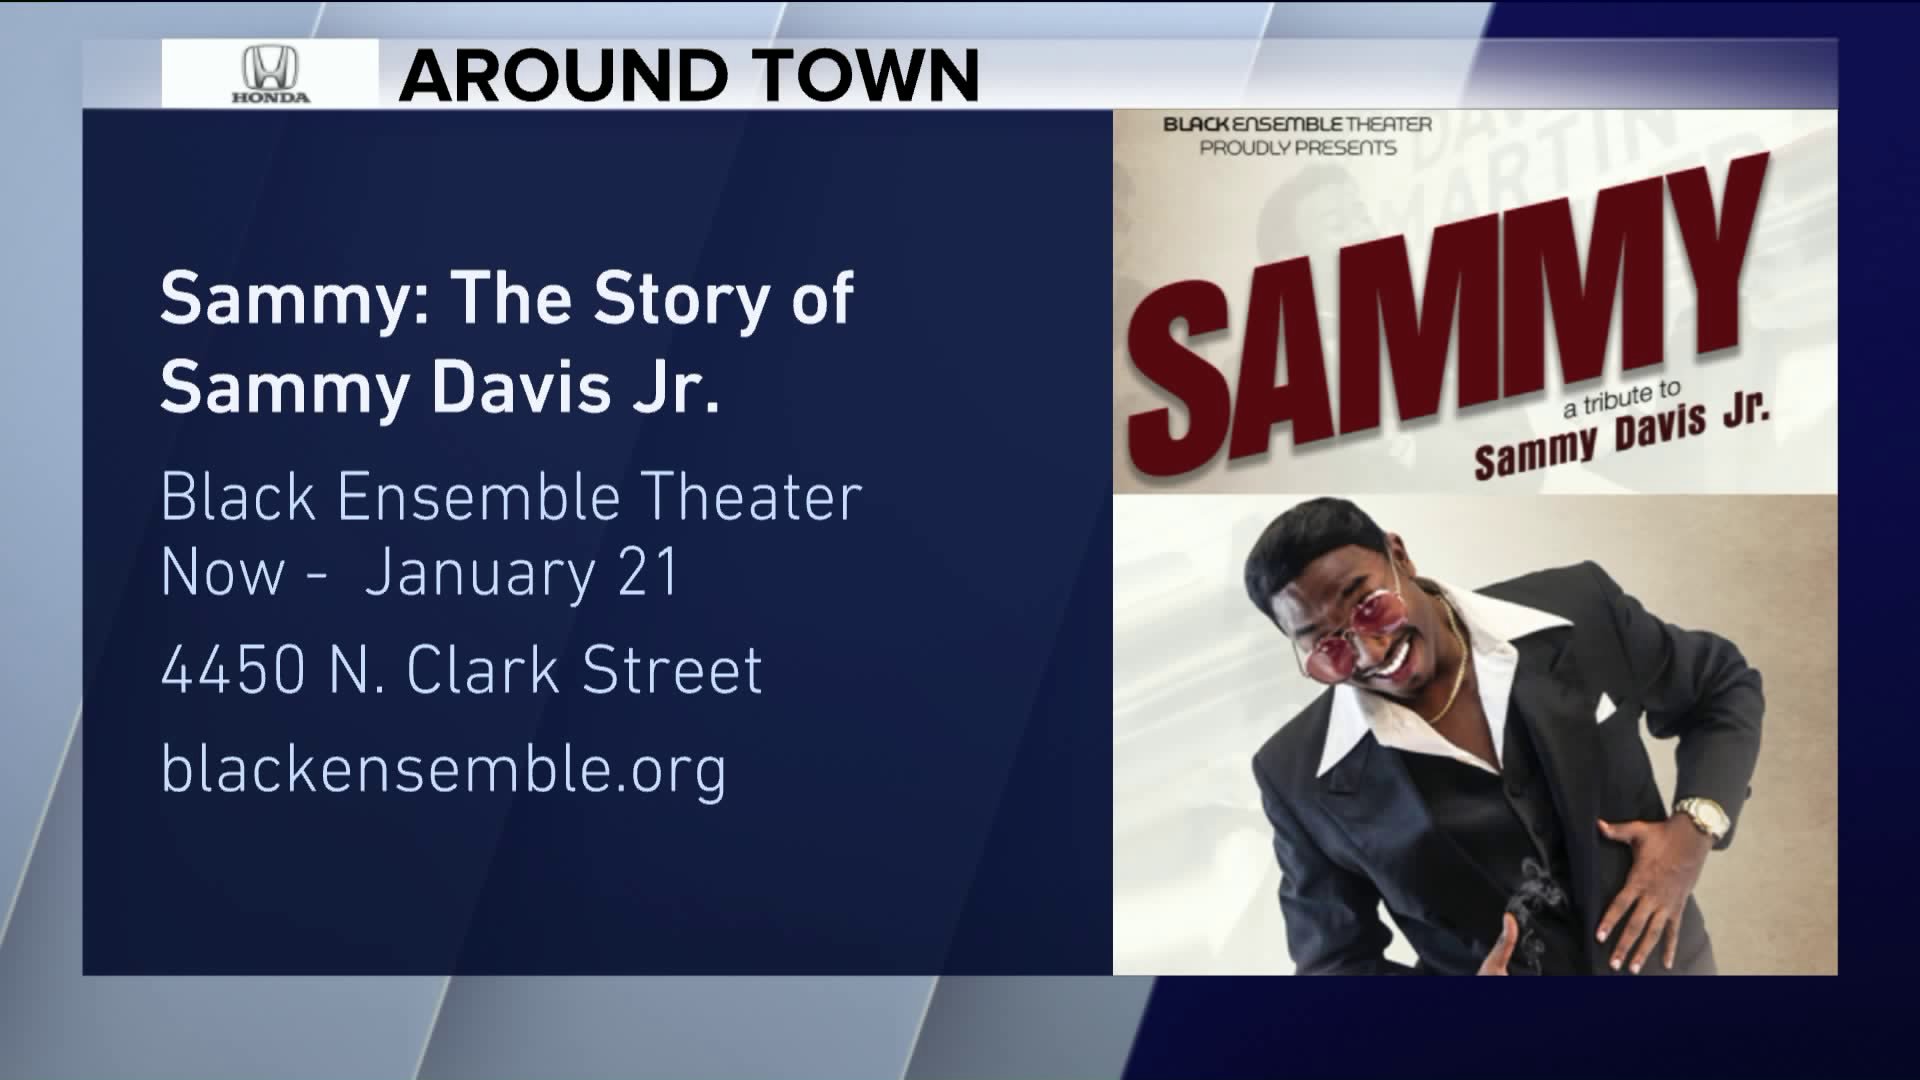 Around Town checks out Sammy: A Tribune to Sammy Davis Jr.